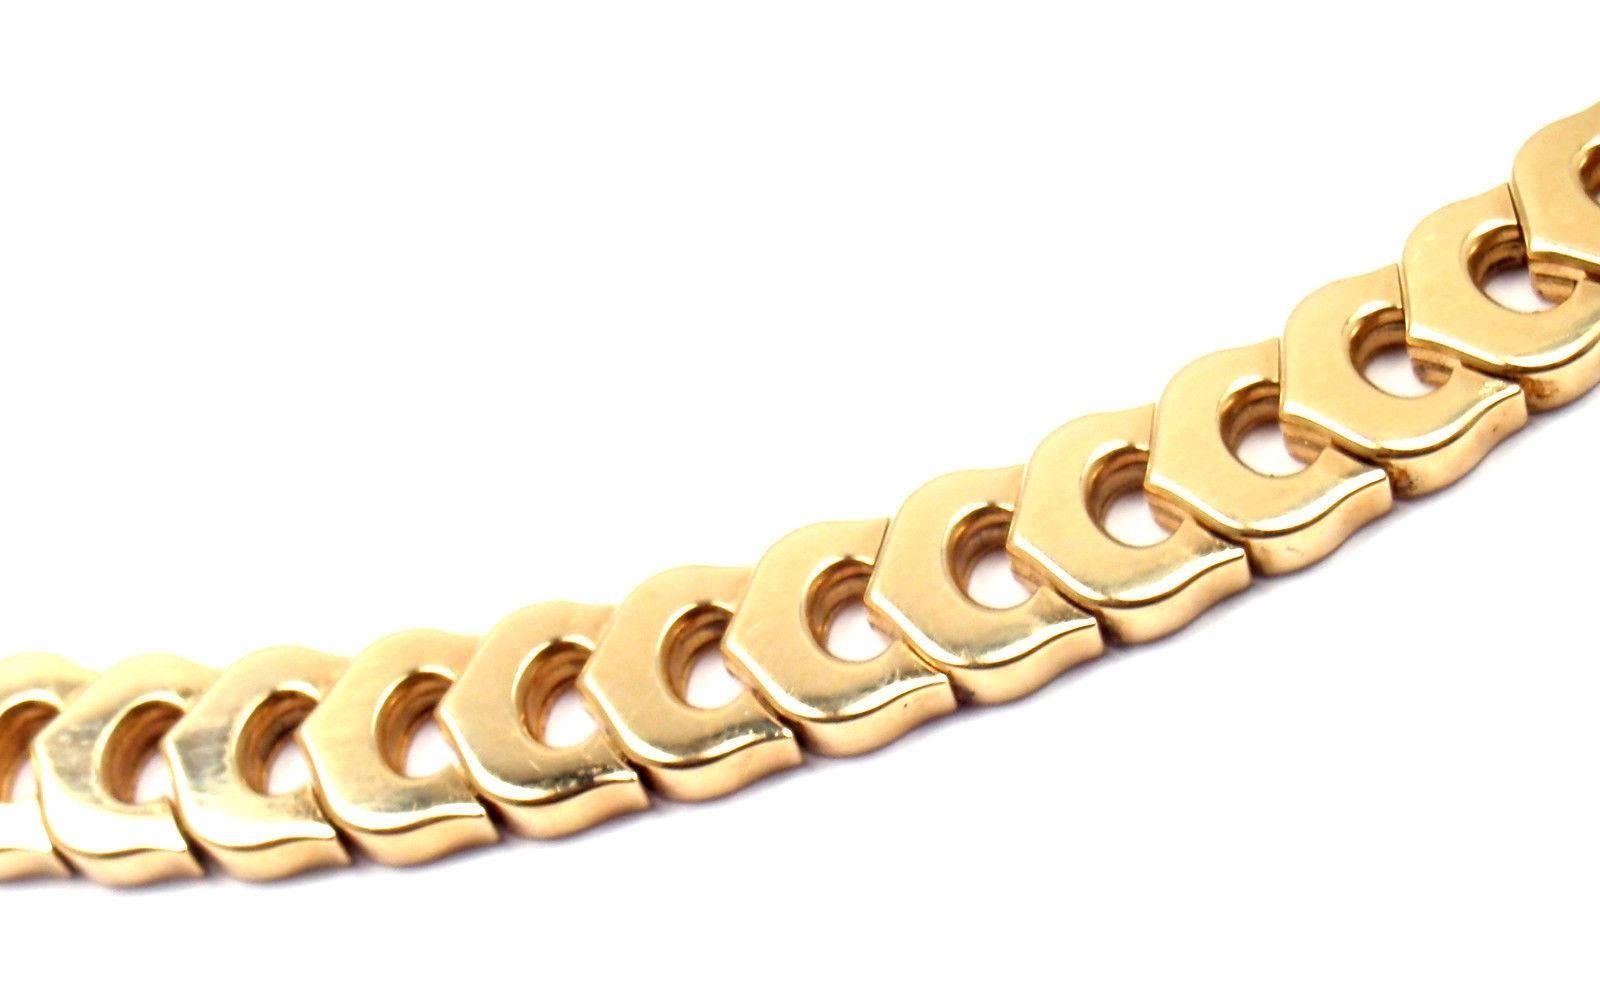 18k Yellow Gold C De Cartier Link Necklace by Cartier. 

Details: 
Weight: 86.5 grams
Length: 17